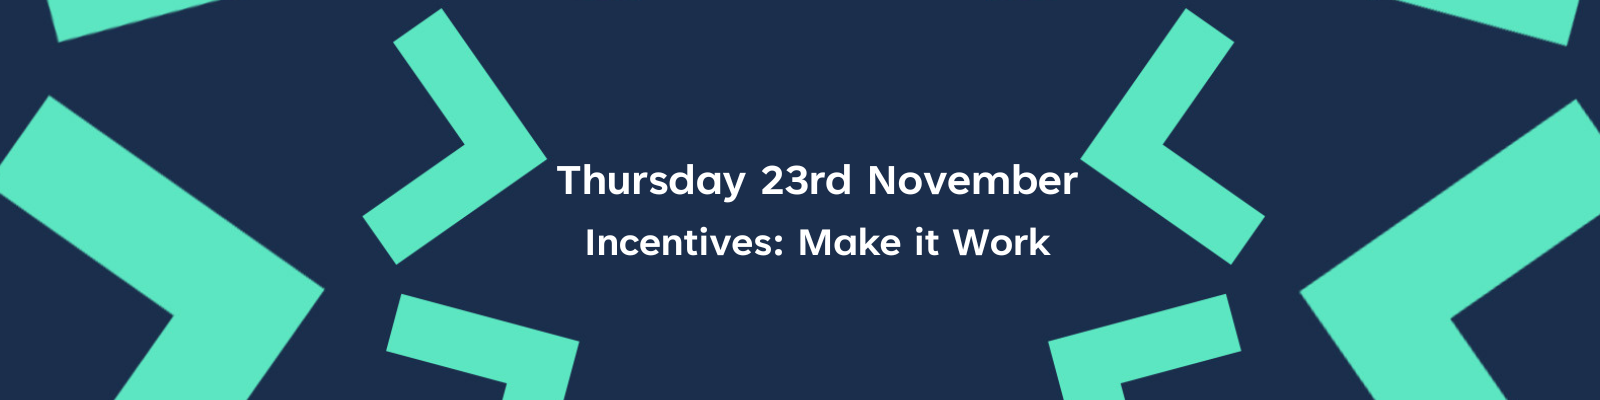 Thursday 23rd November. Incentives: Make it Work